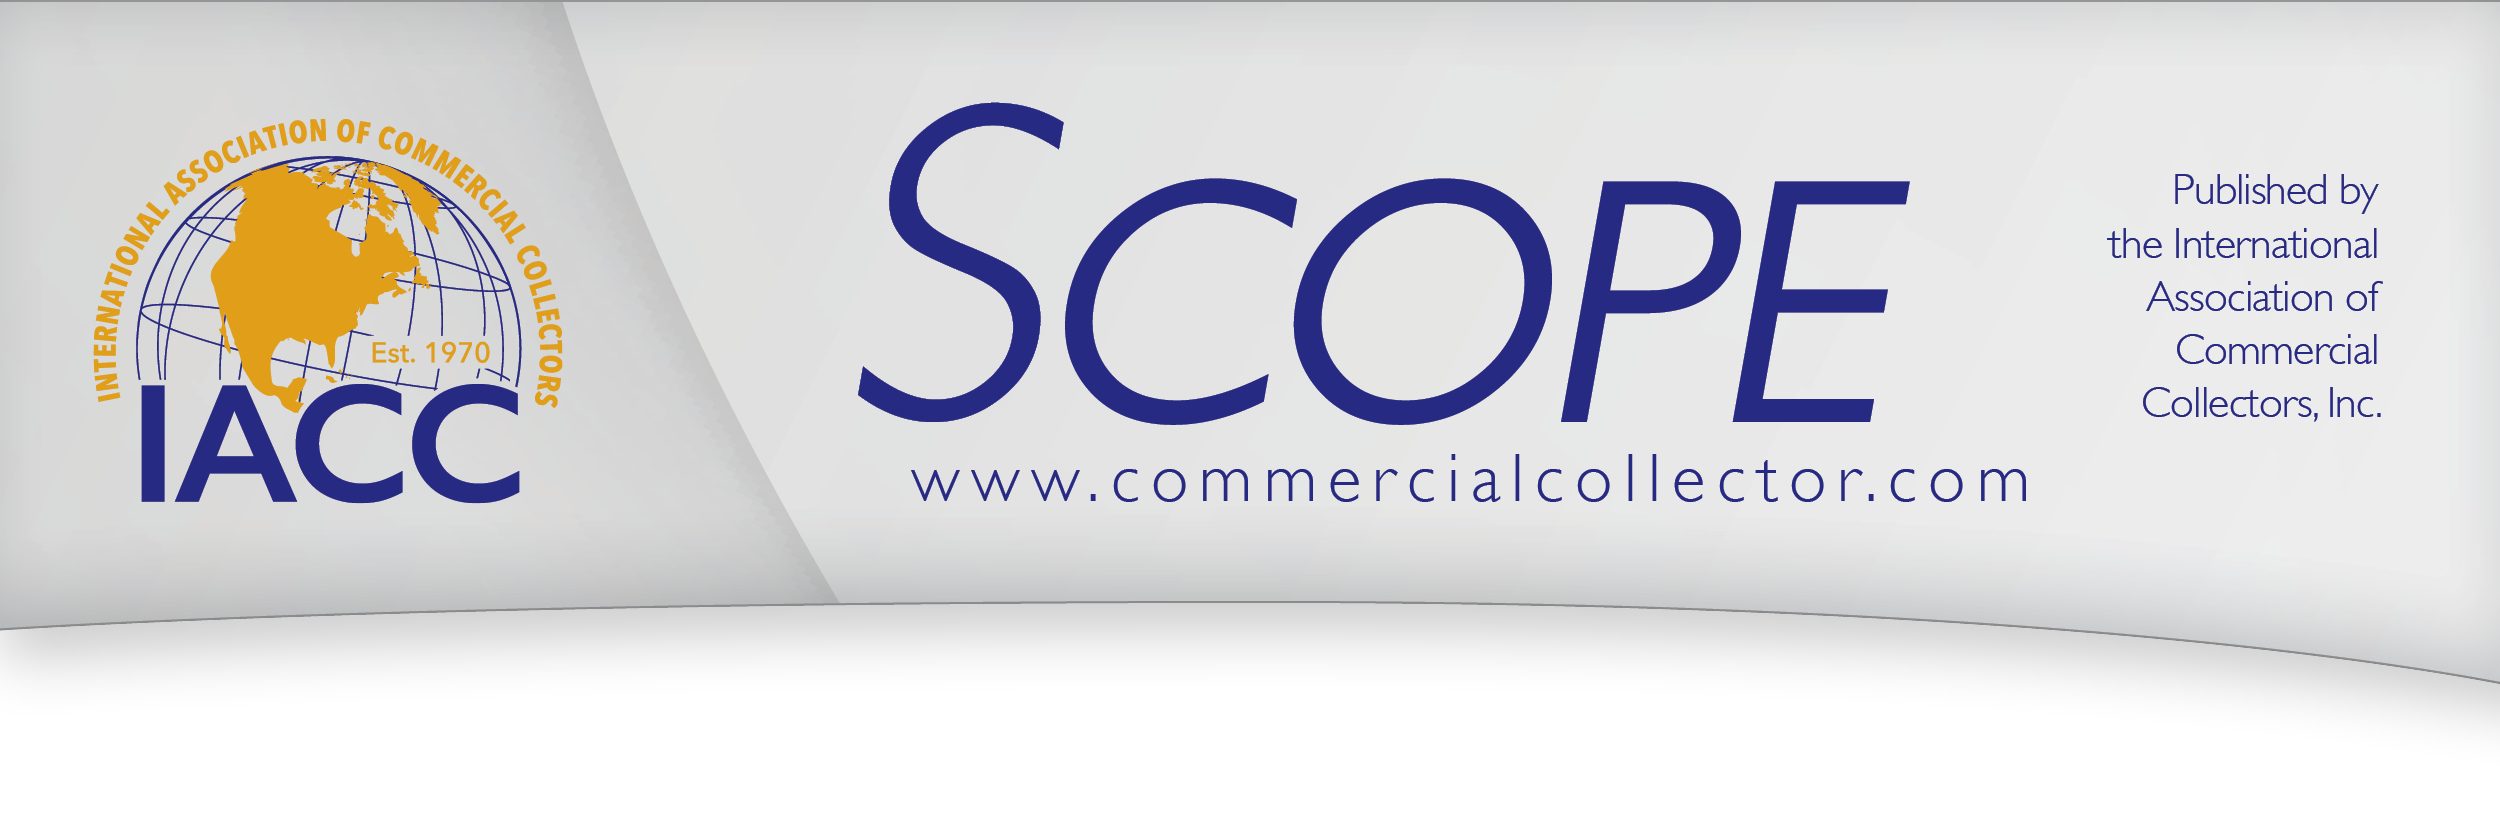 IACC Scope Newsletter Header